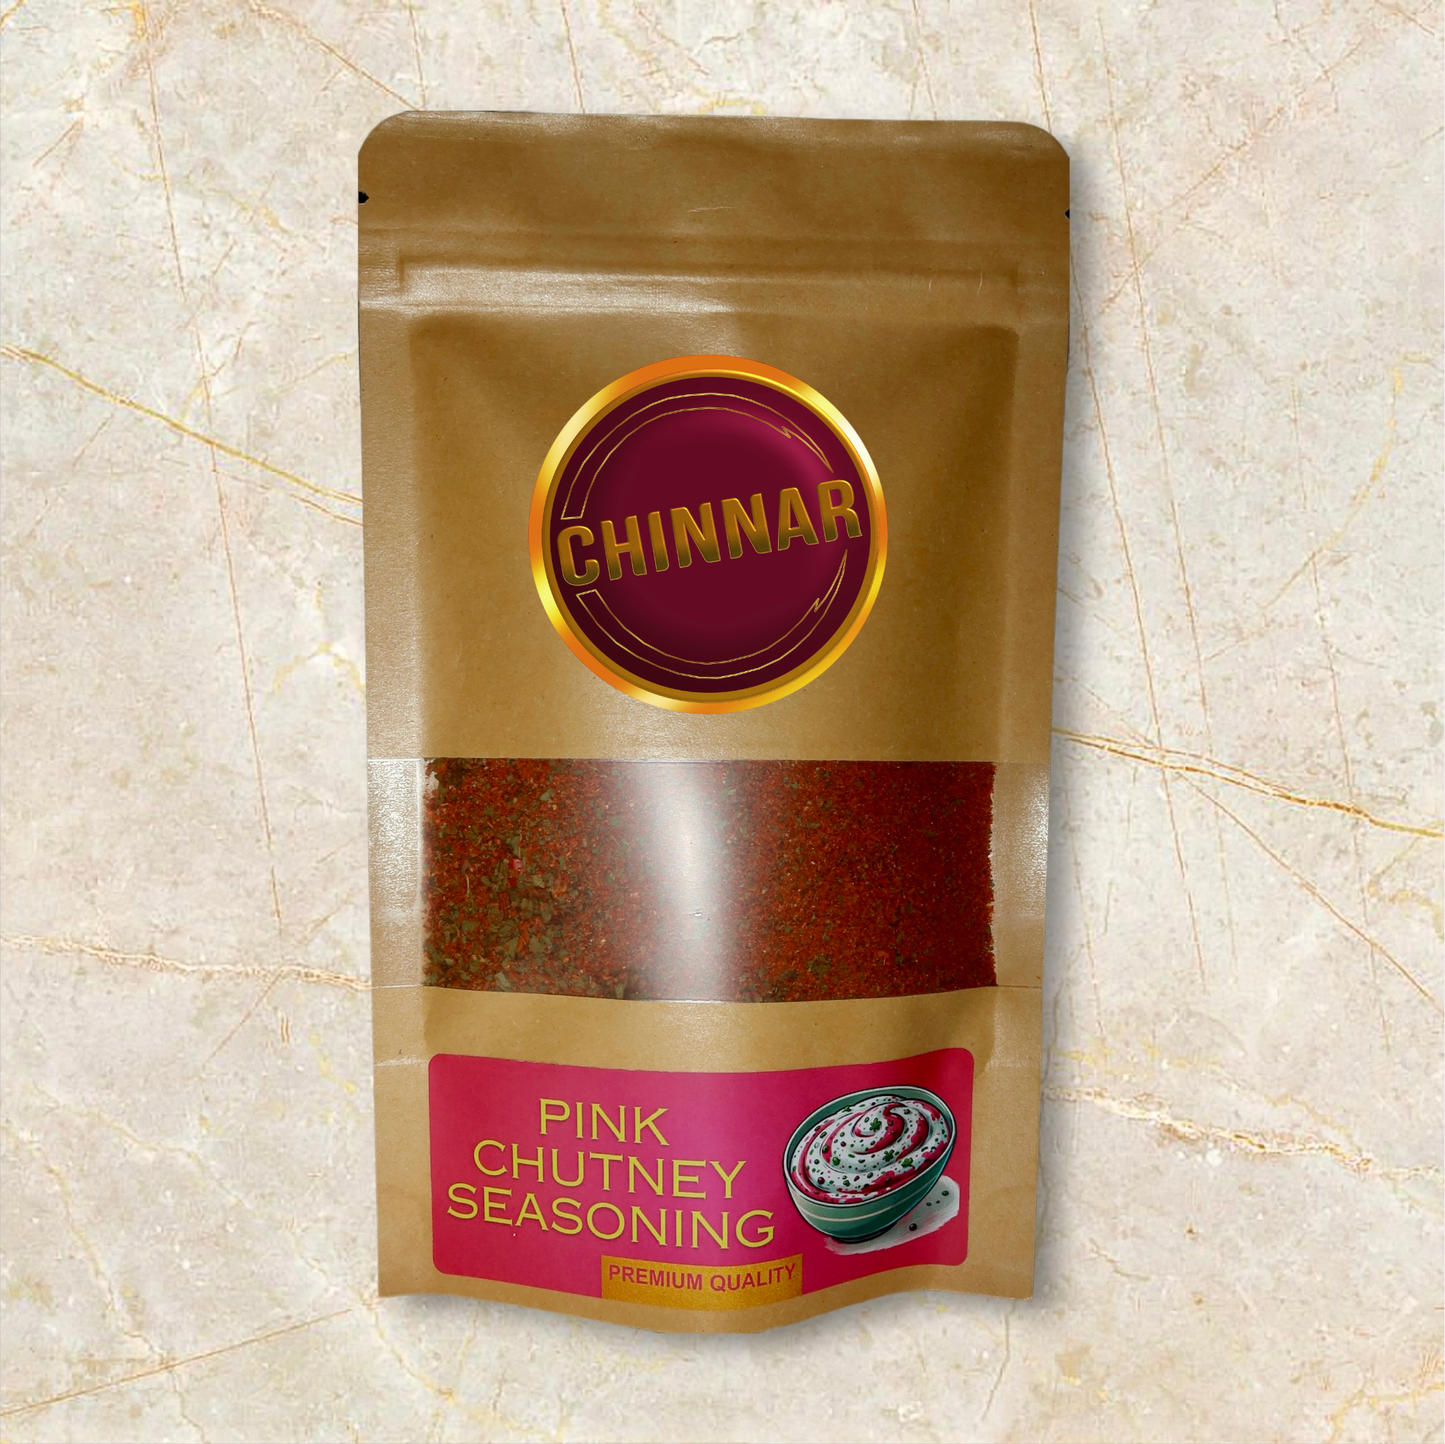 Chinnar - Pink Chutney Seasoning